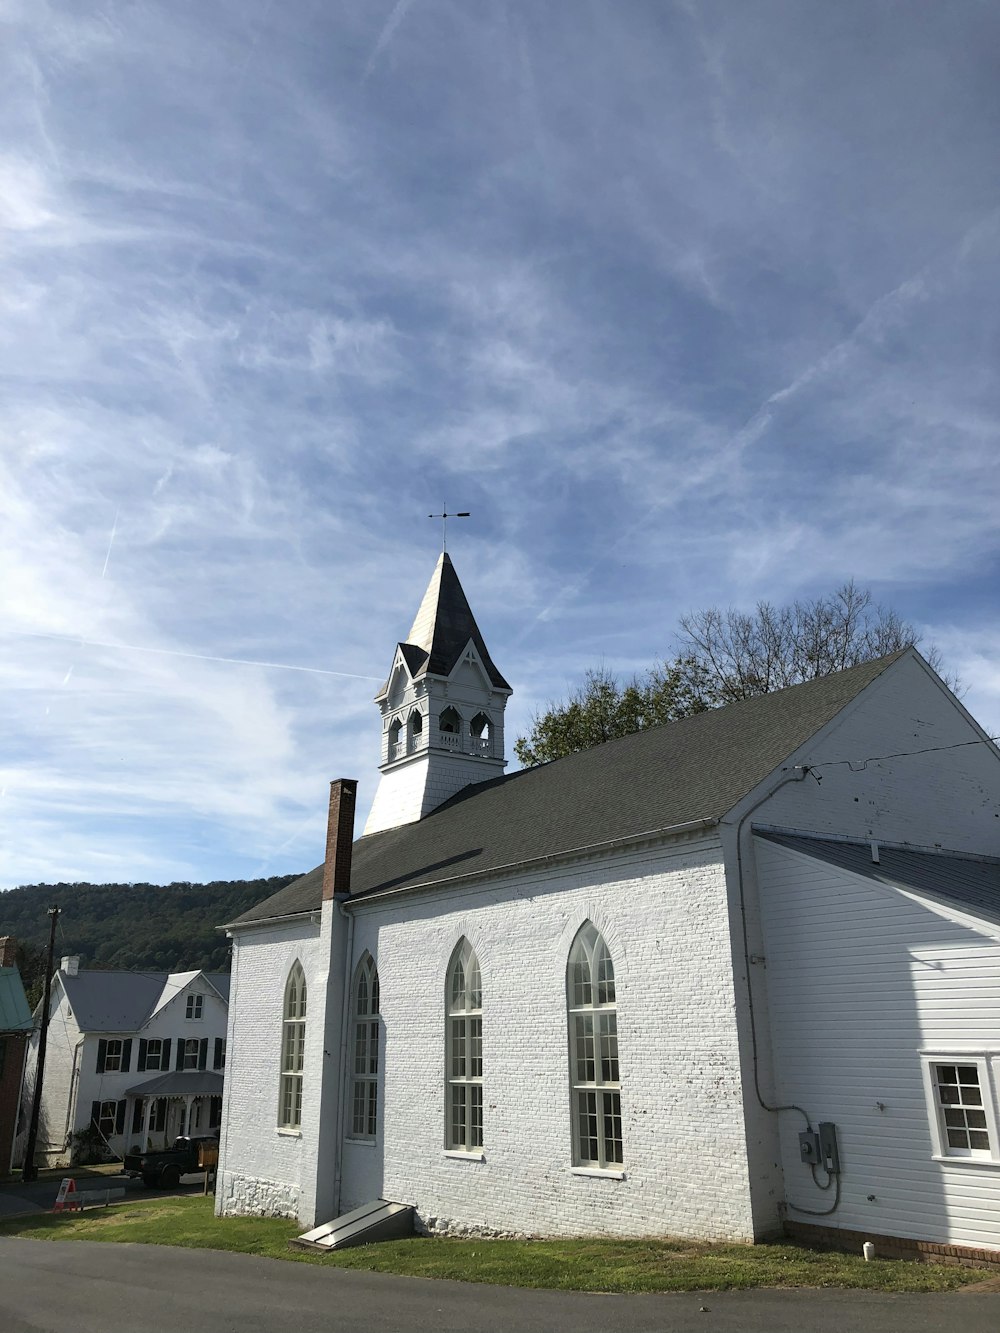 white and gray church near trees